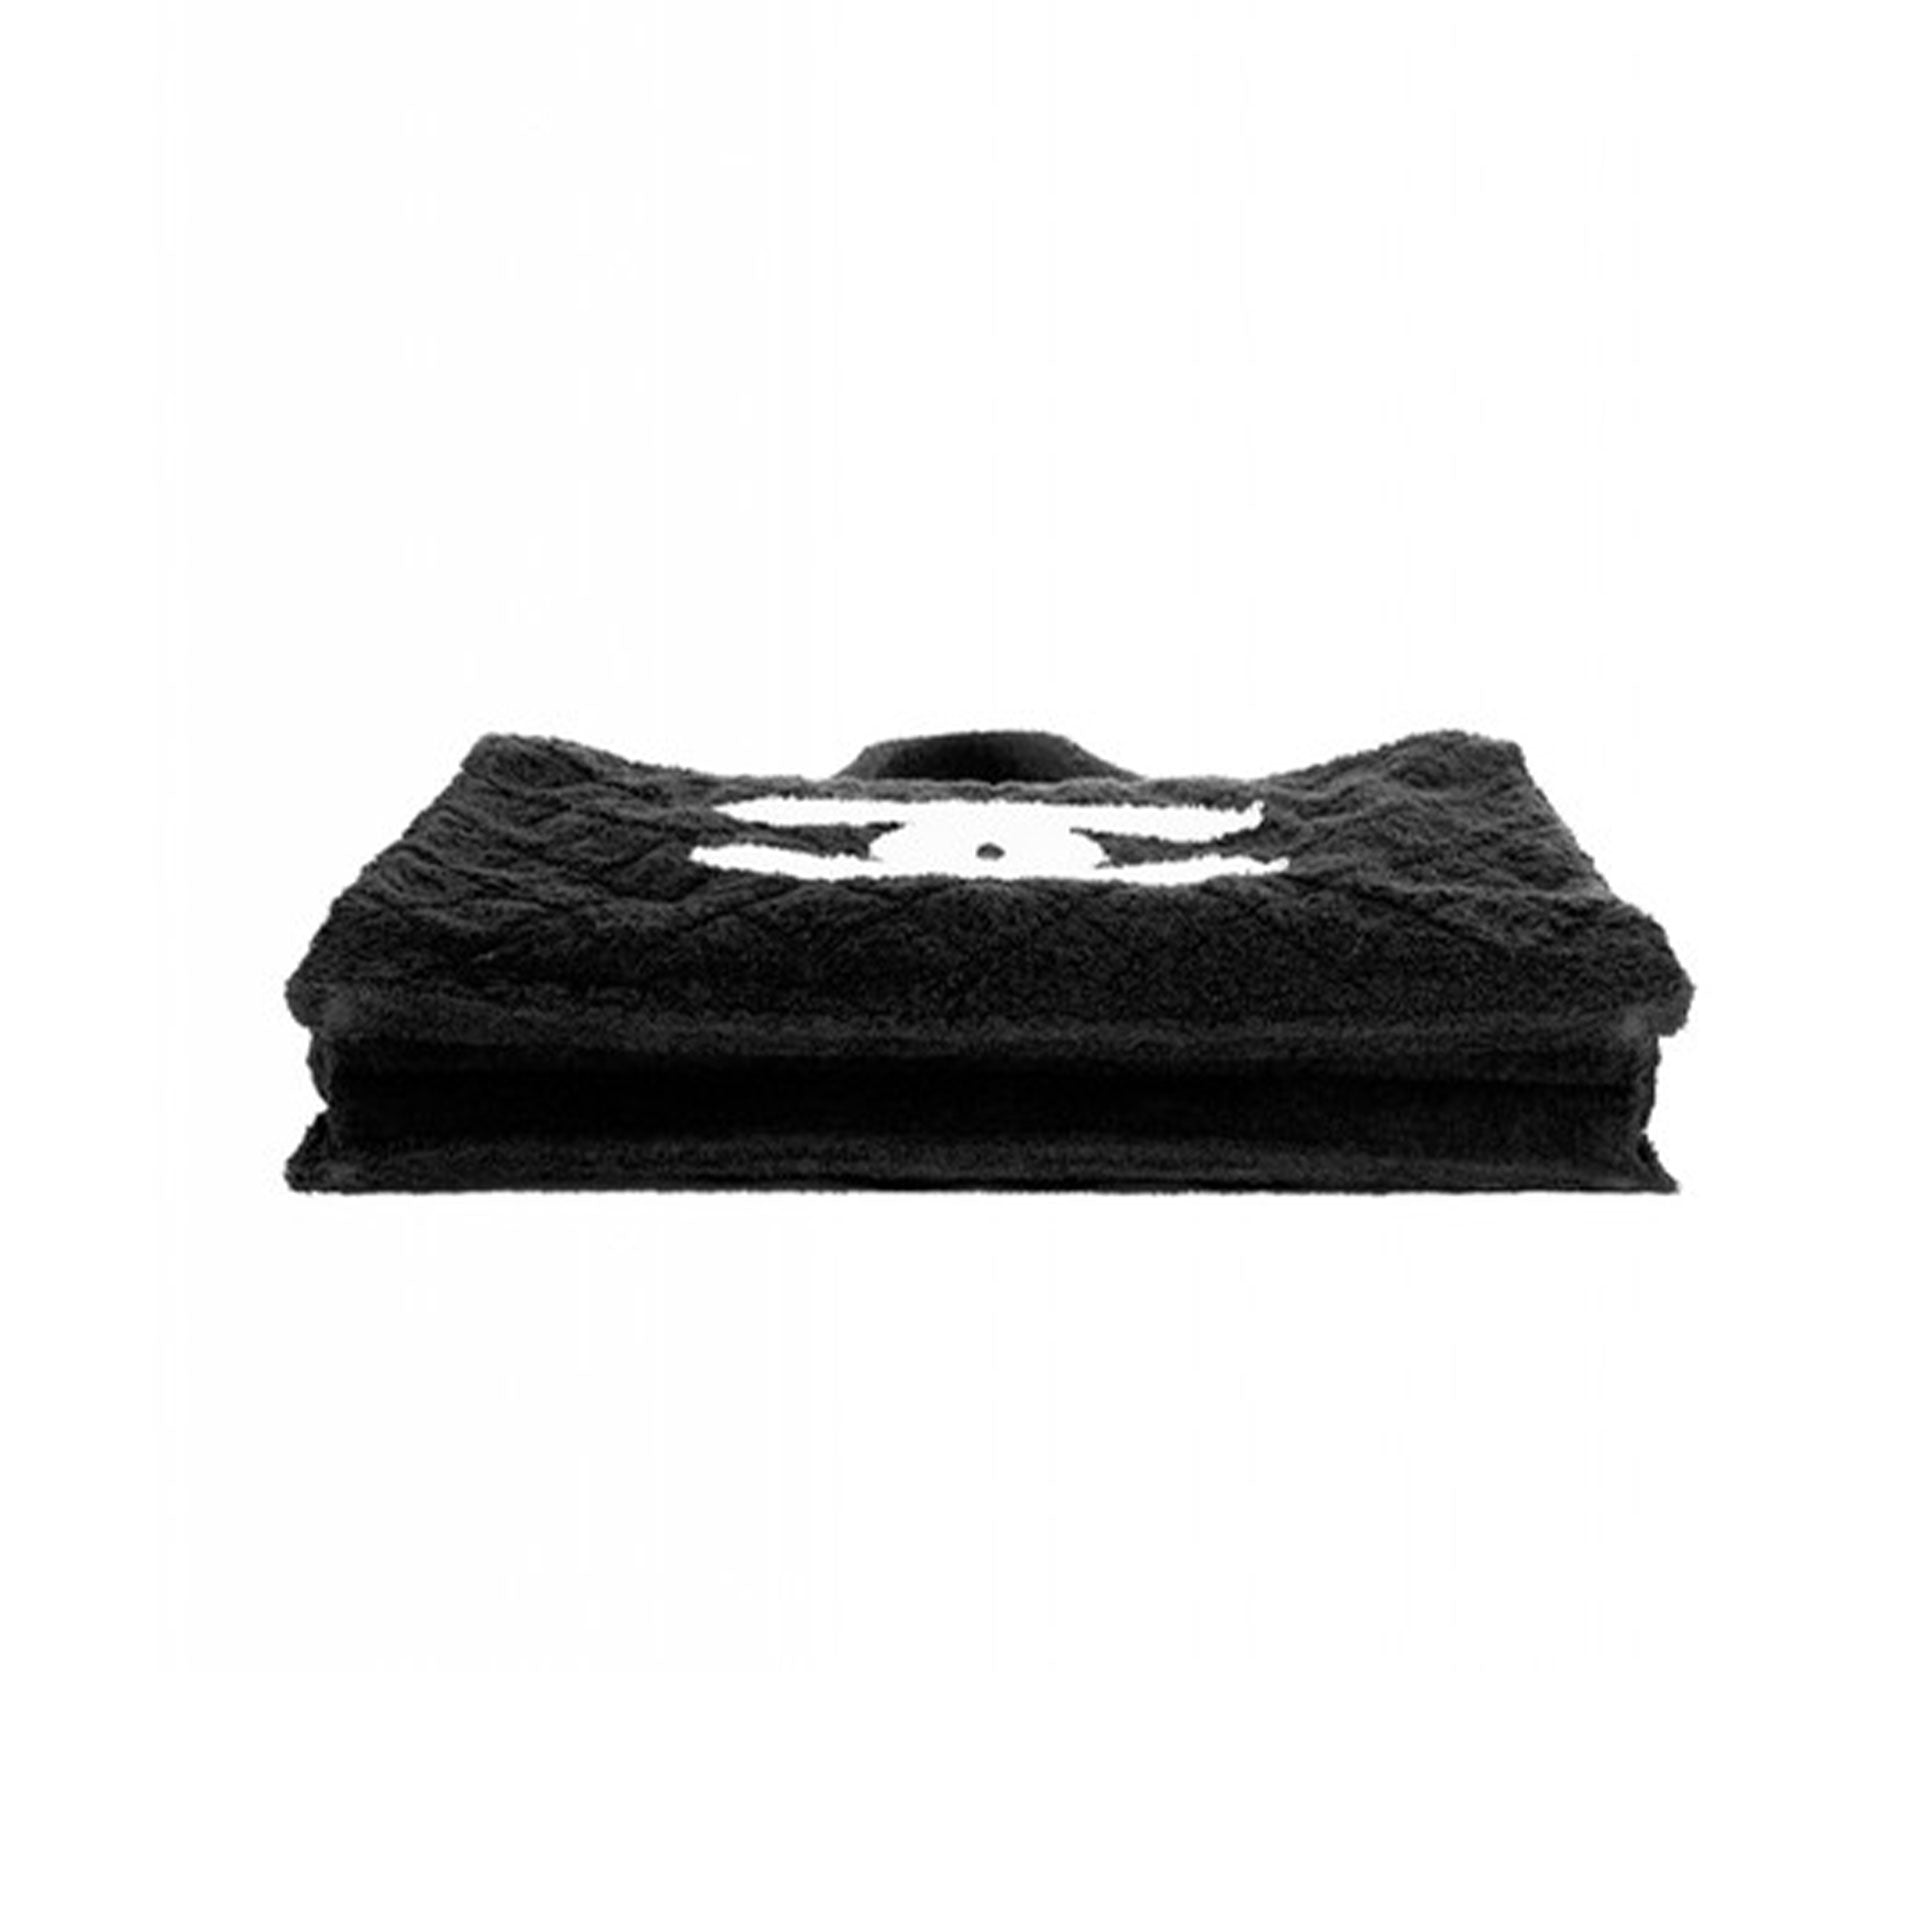 Chanel Timeless CC Towel Black Terry Cloth Beach Bag